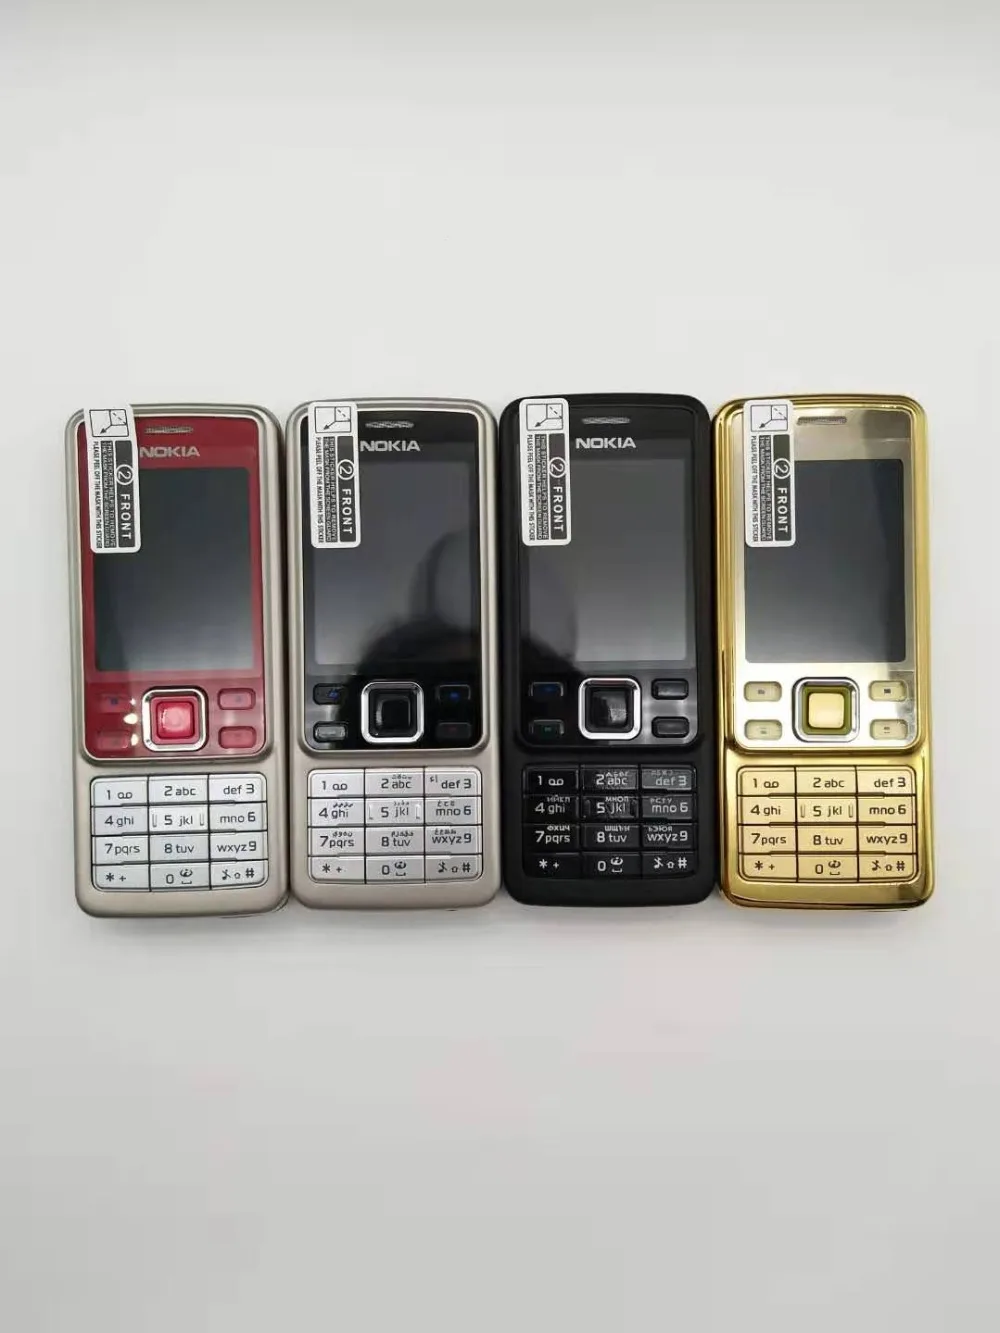 Nokia 6300 Refurbished-Original Unlocked  5MP GSM Support Russian&Arabic Keyboard Mobile Phone Tri-Band Multi-language